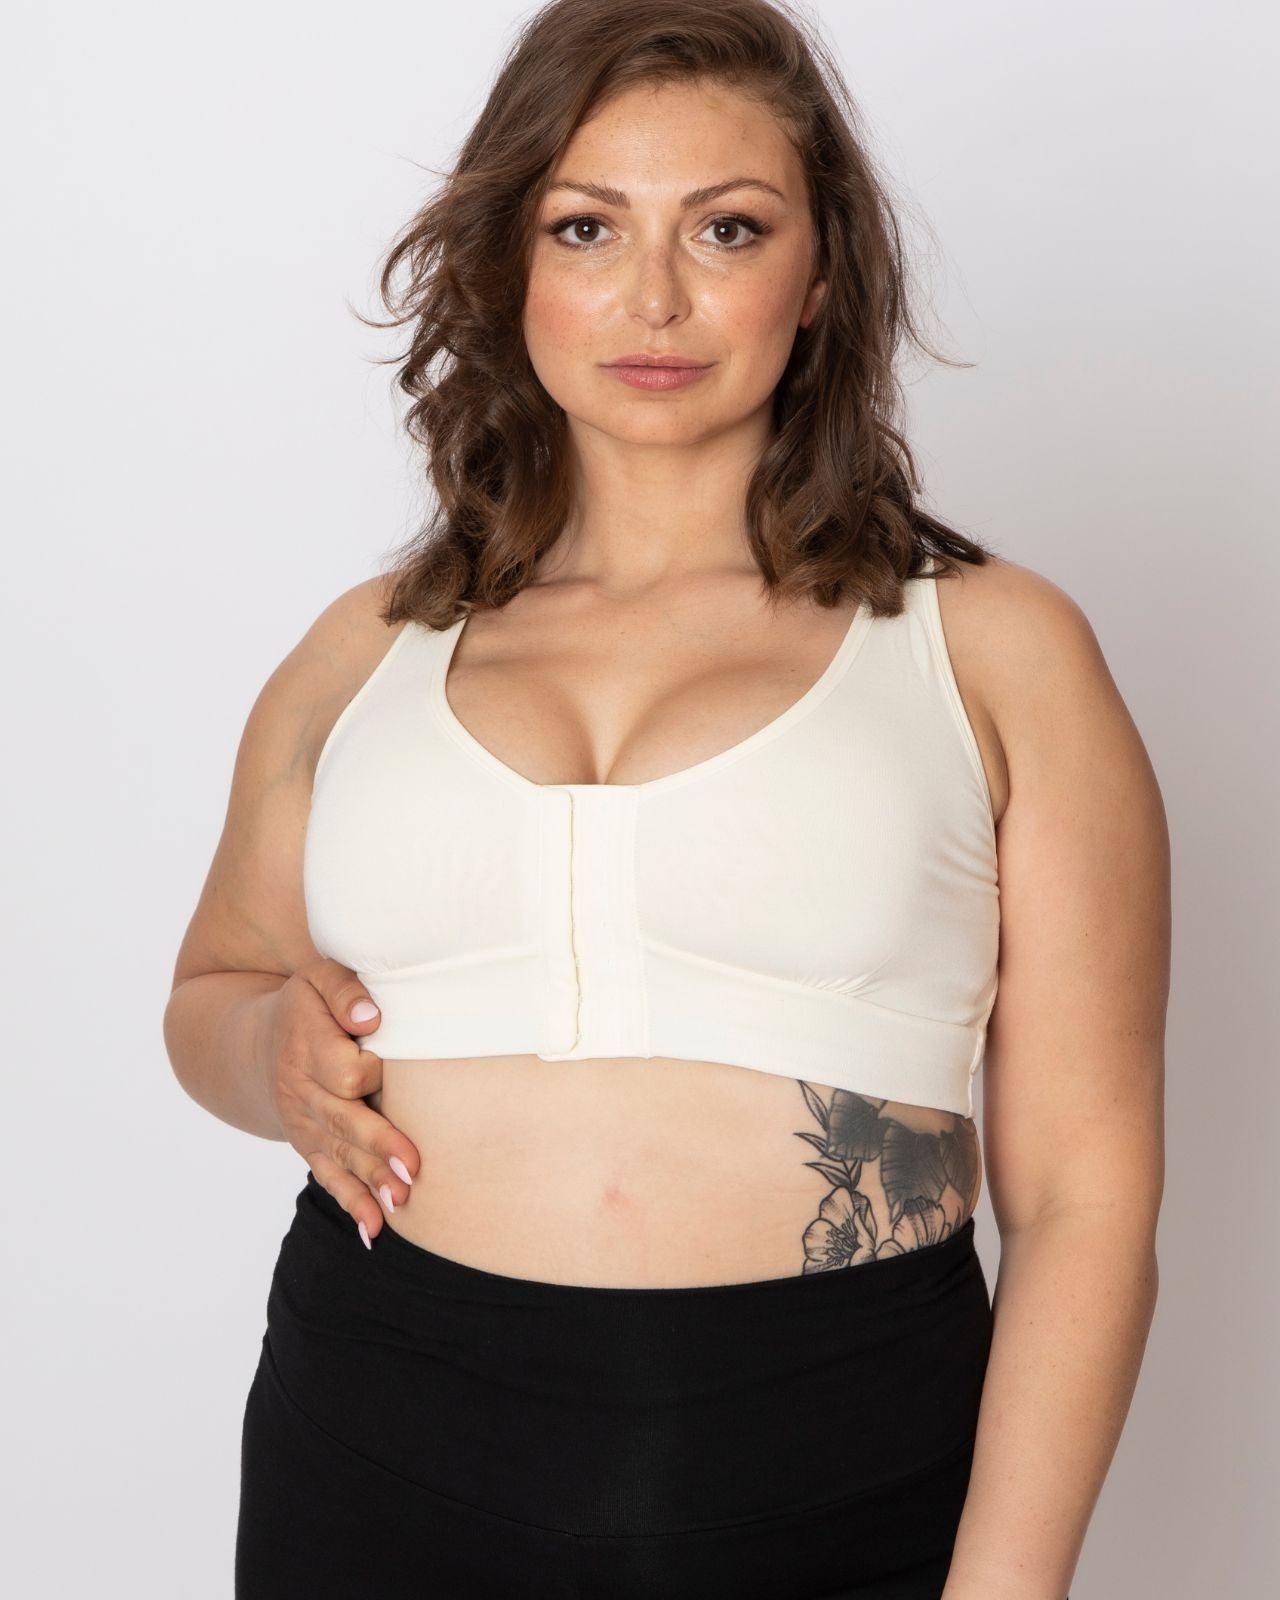 Meet the Rora: Voted Best Post-Mastectomy Bra 